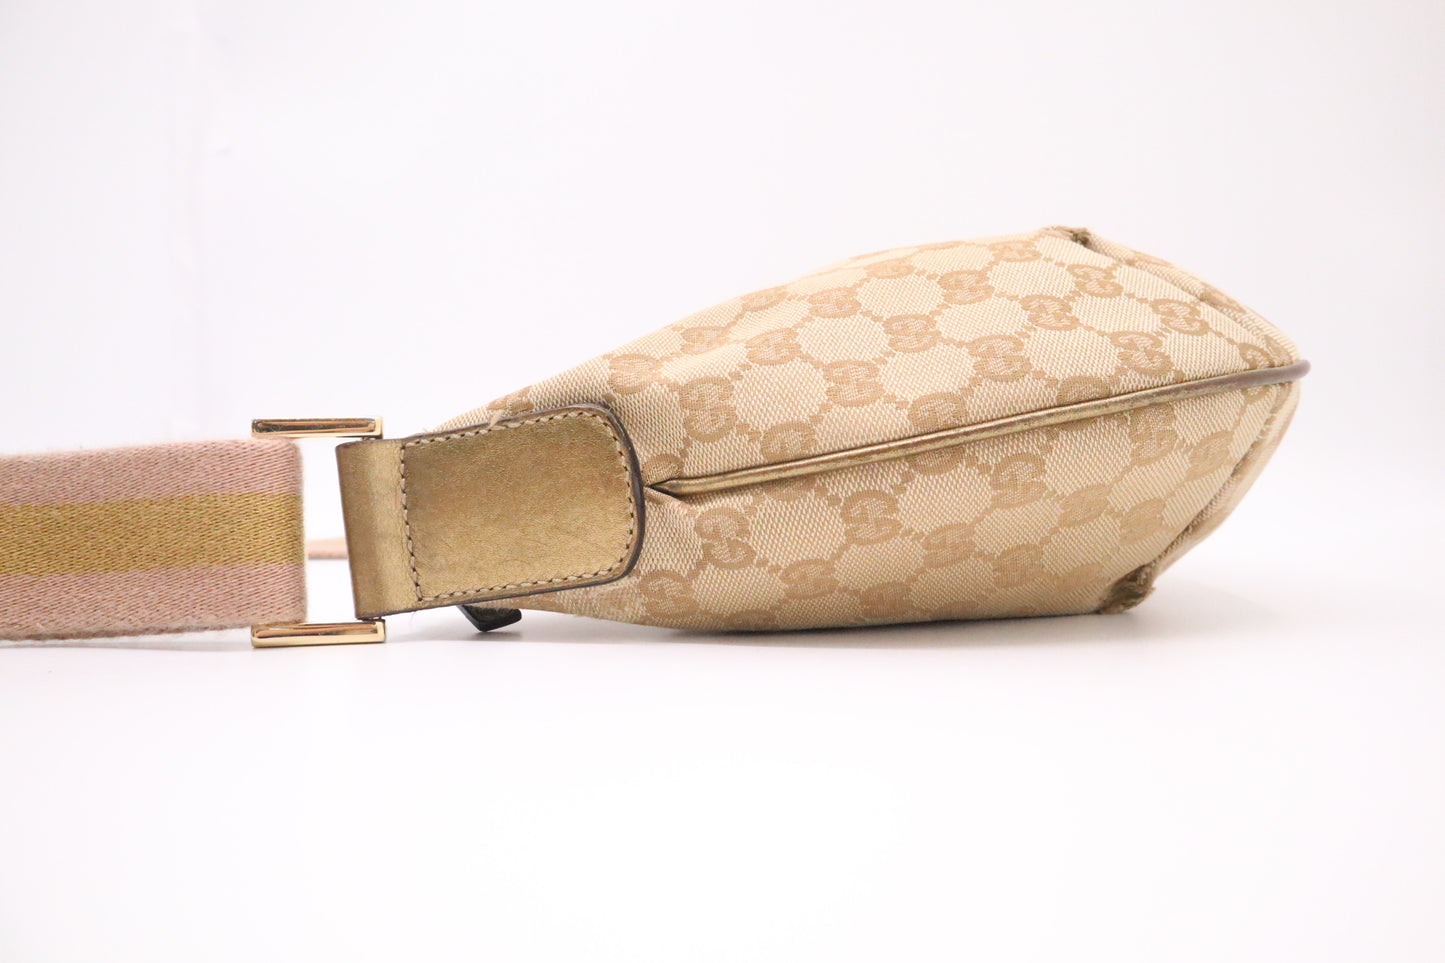 Gucci Shoulder Bag in Beige and Gold GG Supreme Canvas